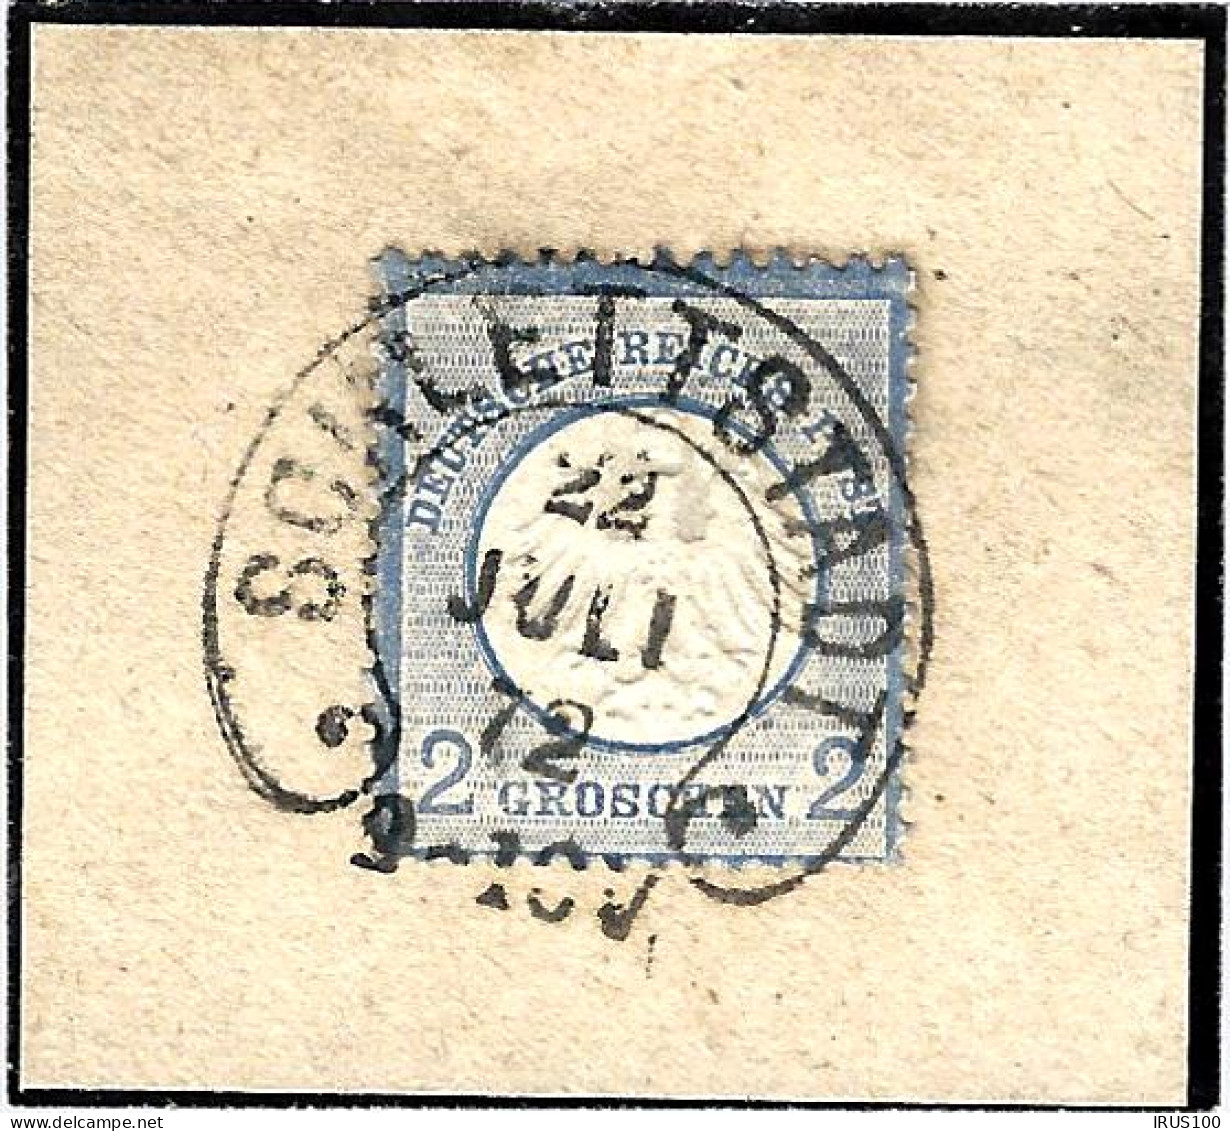  SCHLETSTADT - FRAGMENT DU 22 JUILLET 1872 - CACHET FER À CHEVAL SUR 2 GROSCHEN BLEU - SÉLESTAT - Used Stamps